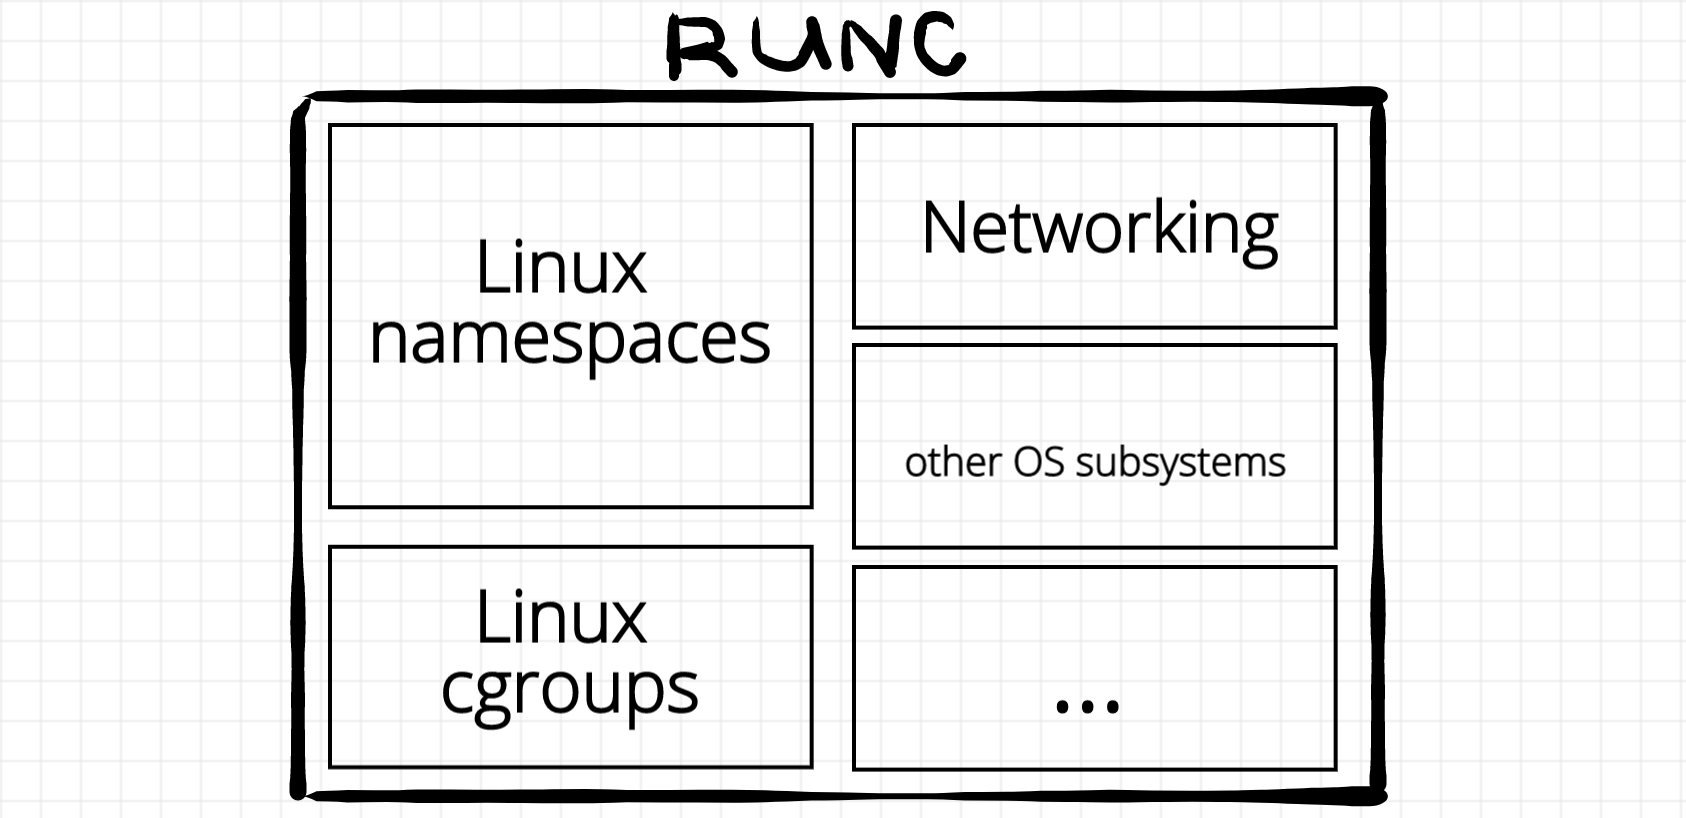 Runc scope - Linux namespaces, cgroups, networking, etc